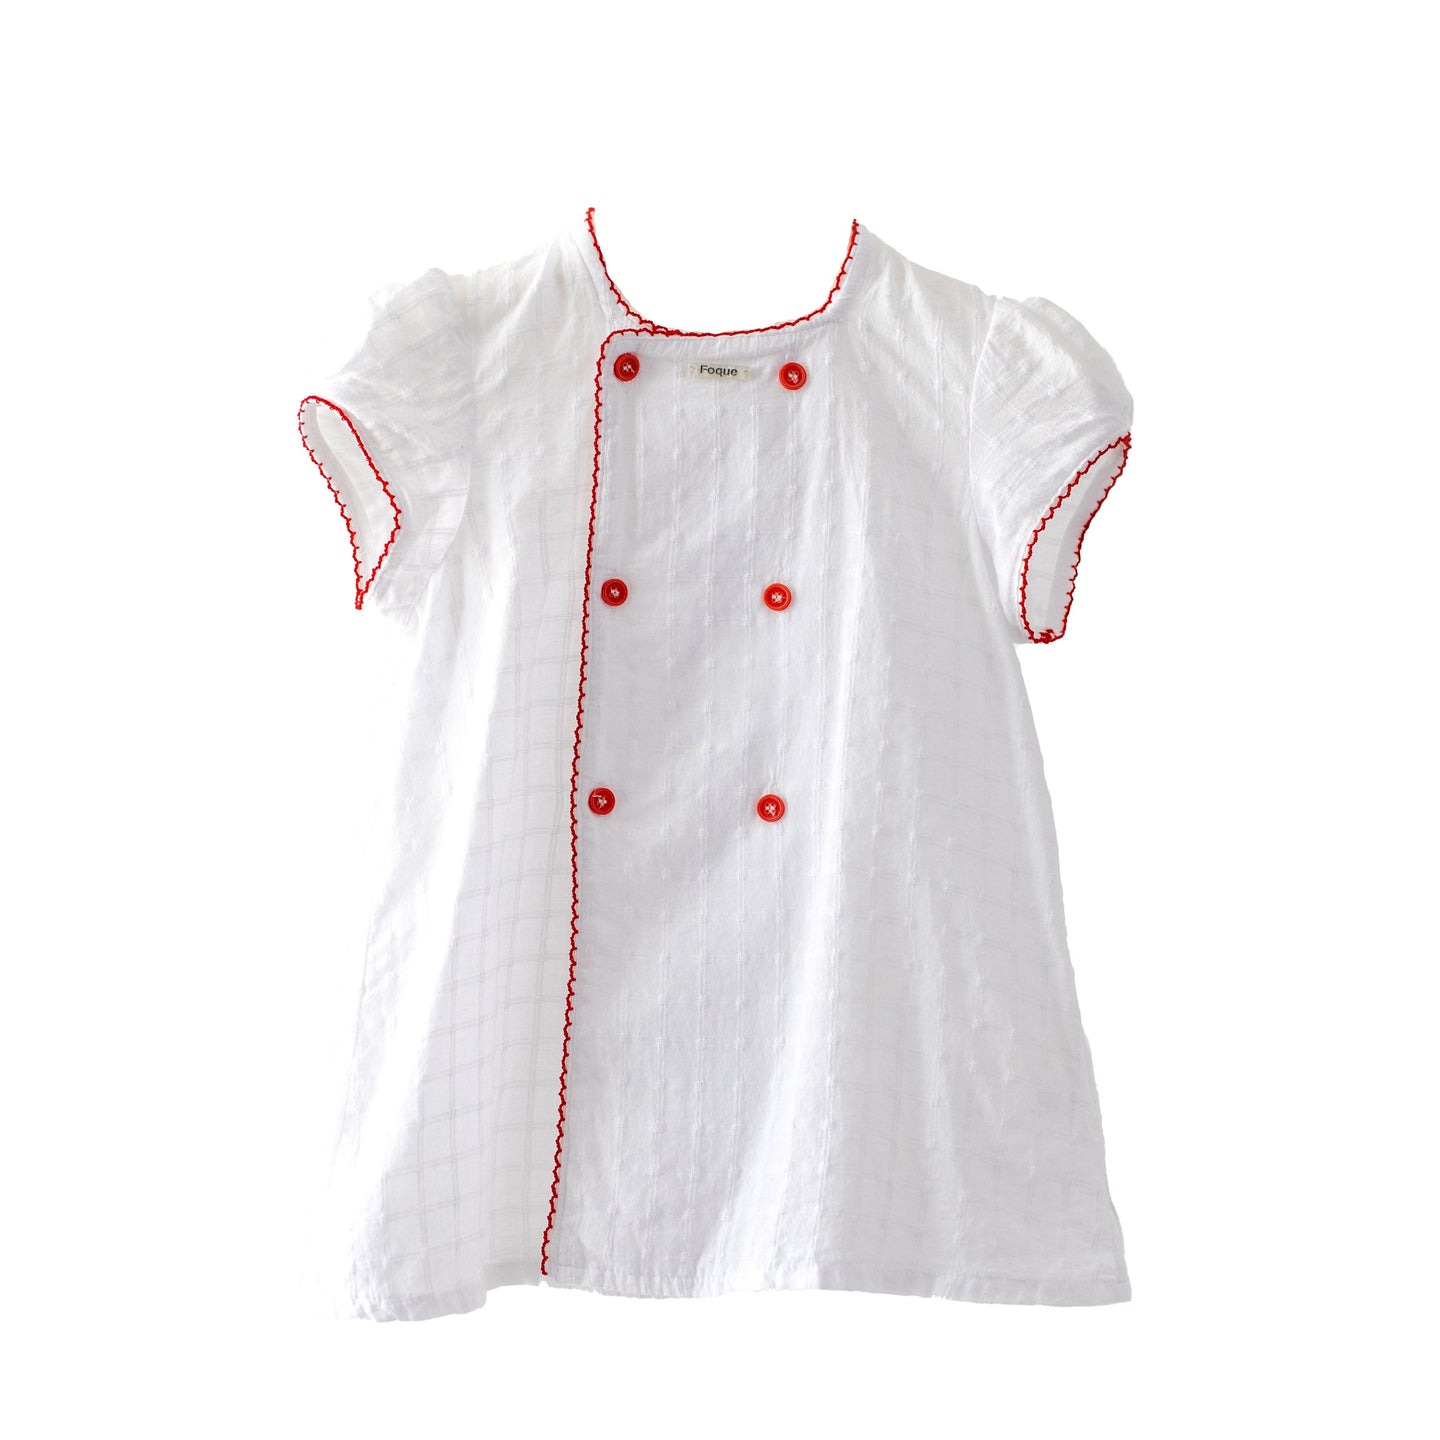 [18-24m] Foque Spain White Dress & Red Bloomer Set